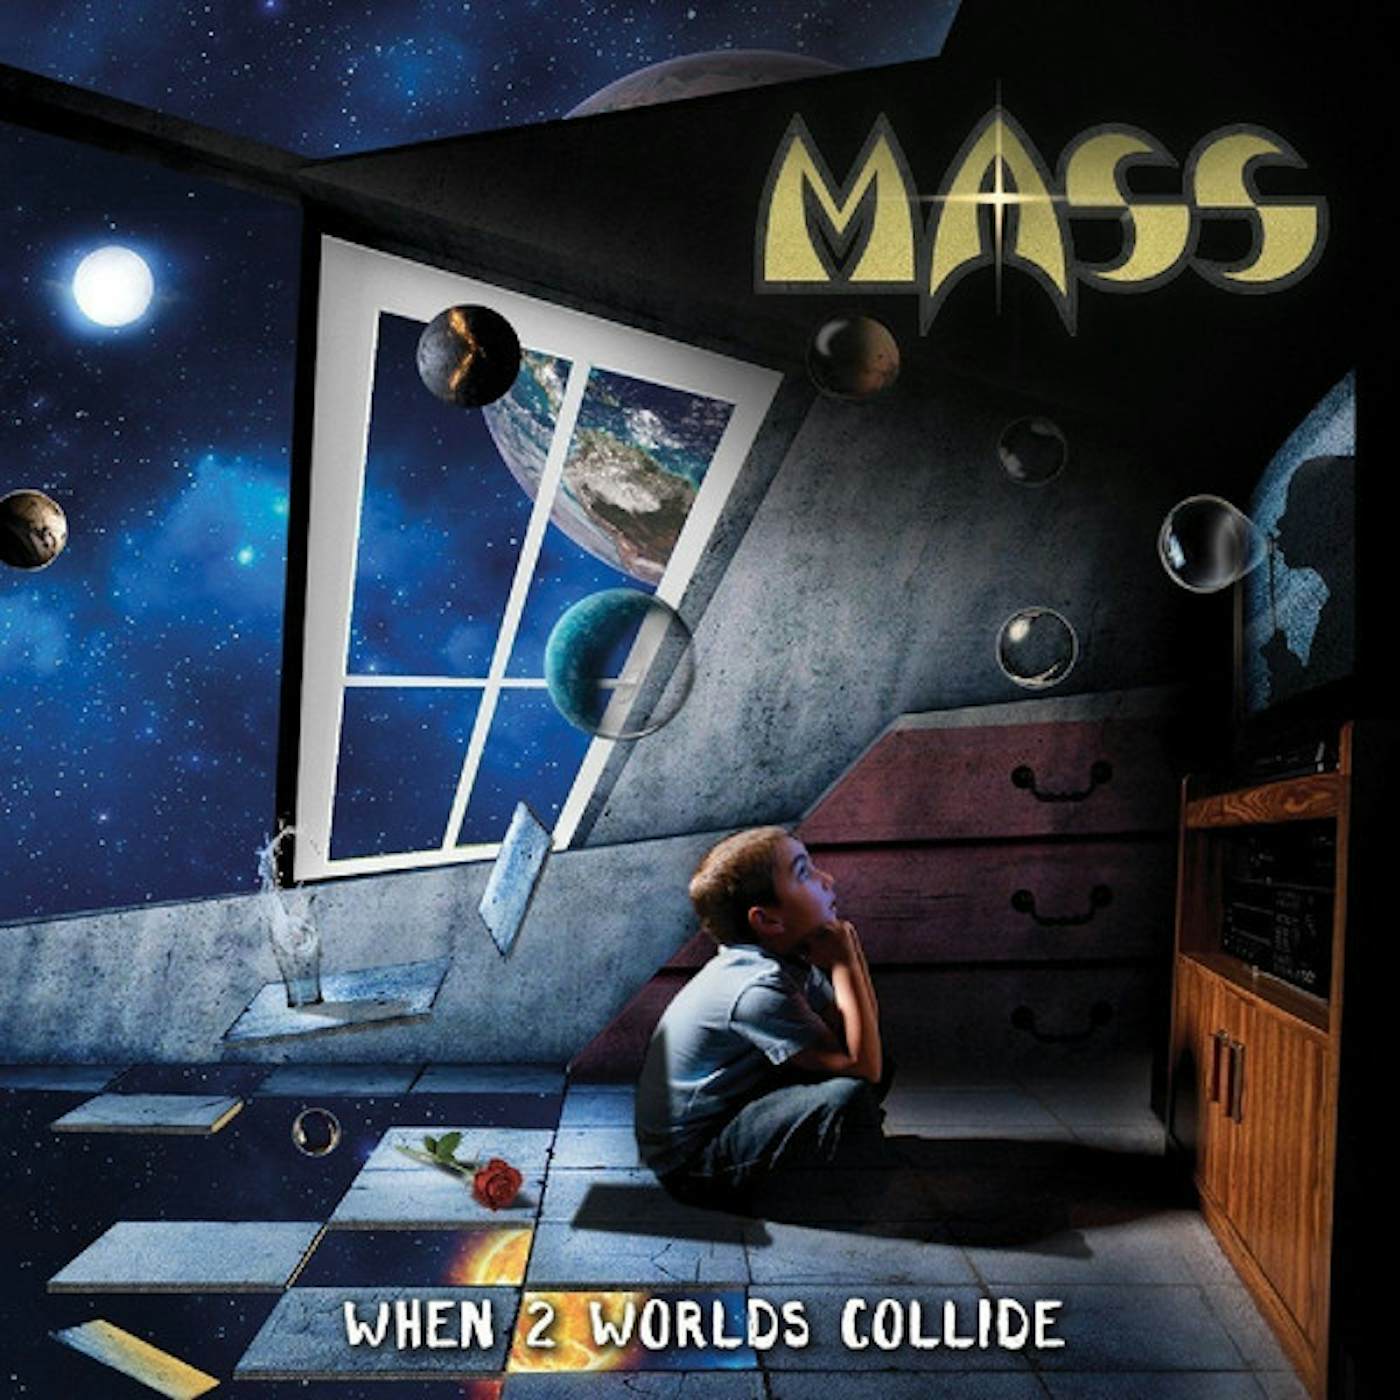 Mass When 2 Worlds Collide Vinyl Record